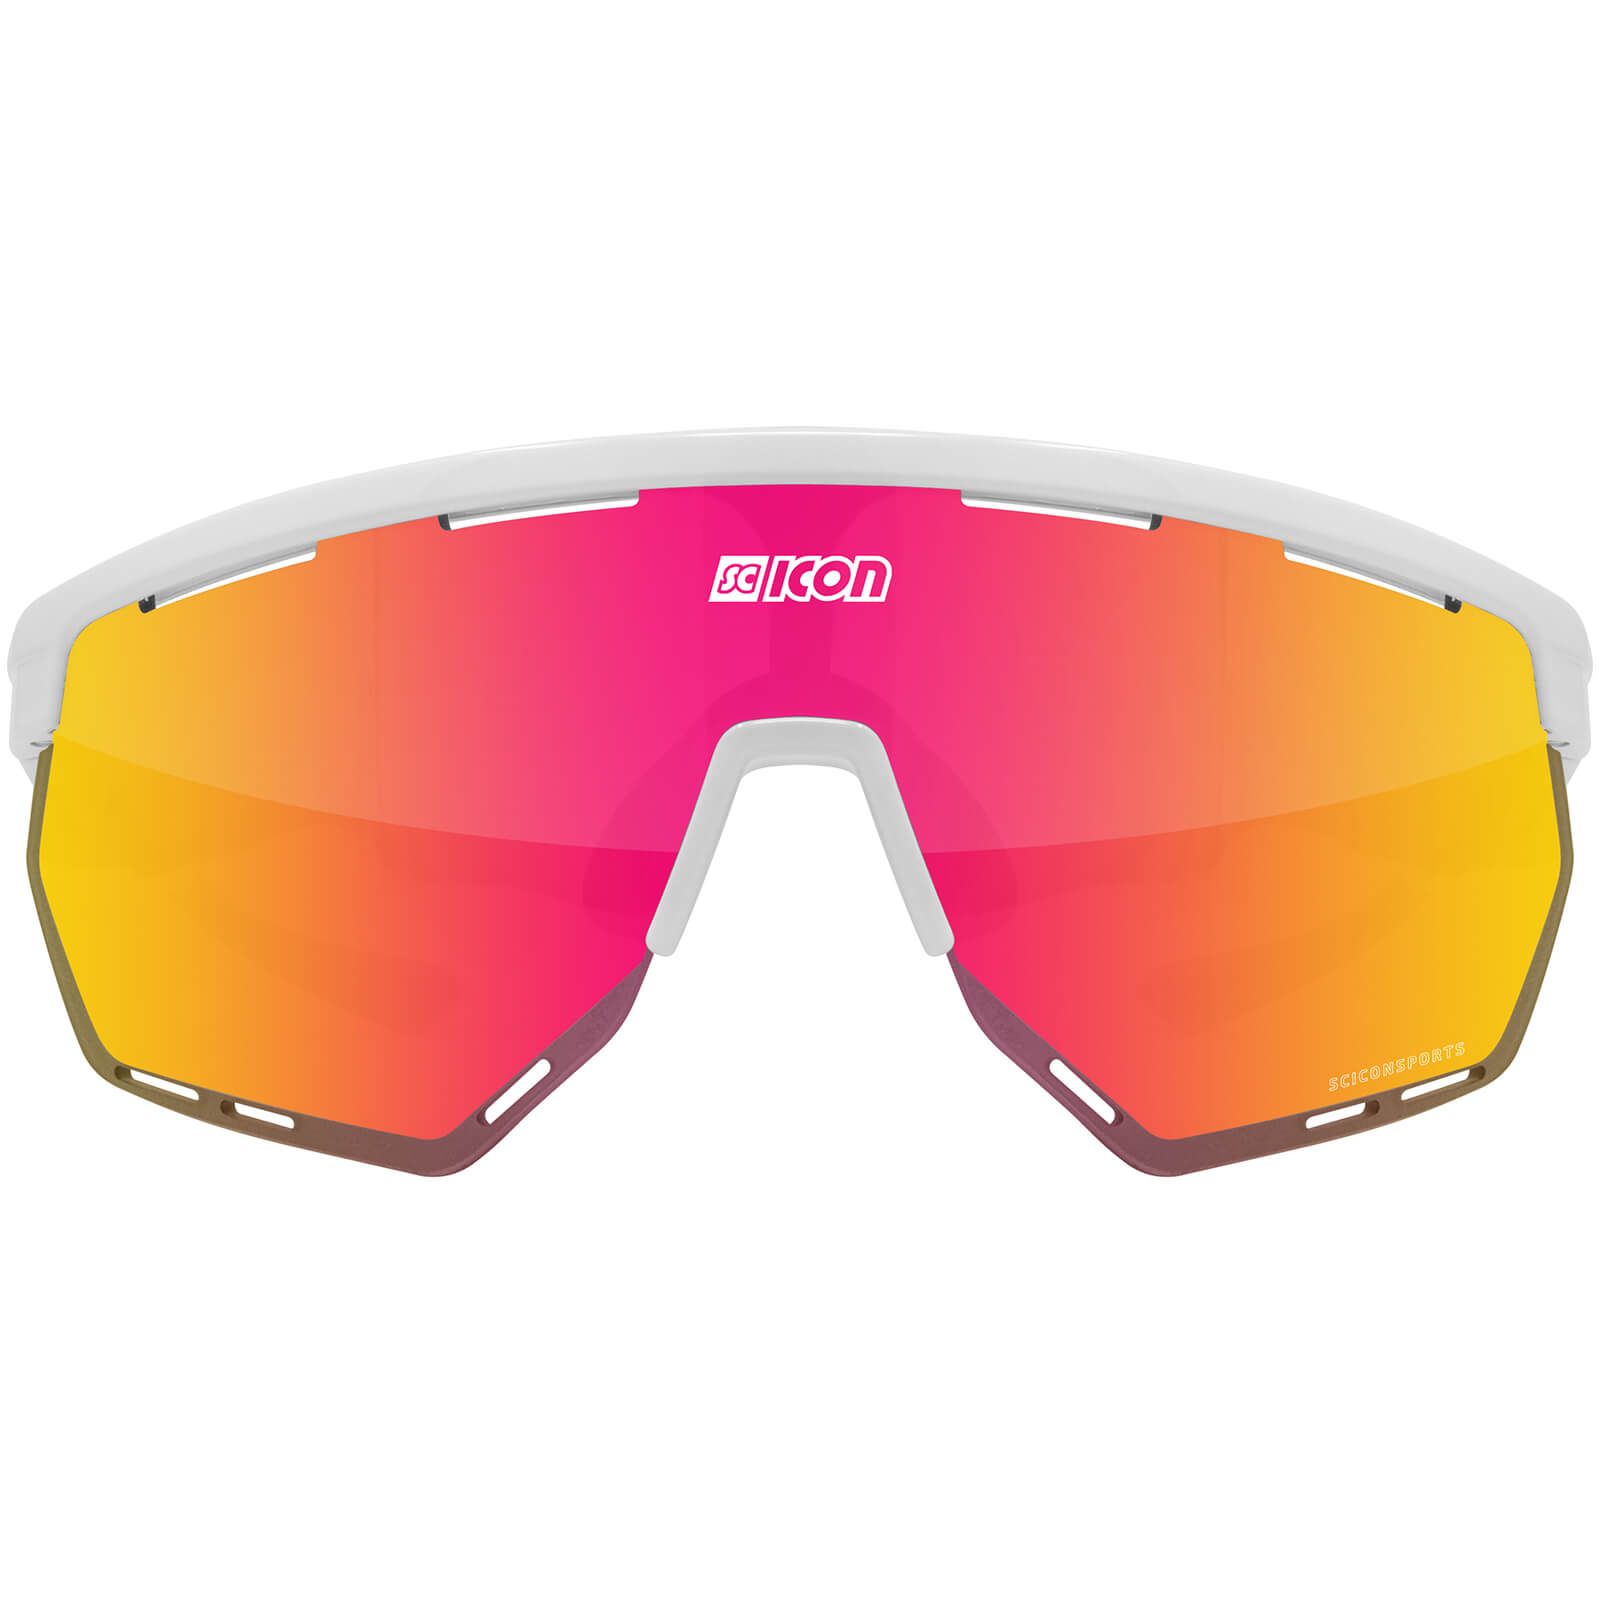 Scicon Aerowing Road Sunglasses - White Gloss - Multimirror Red